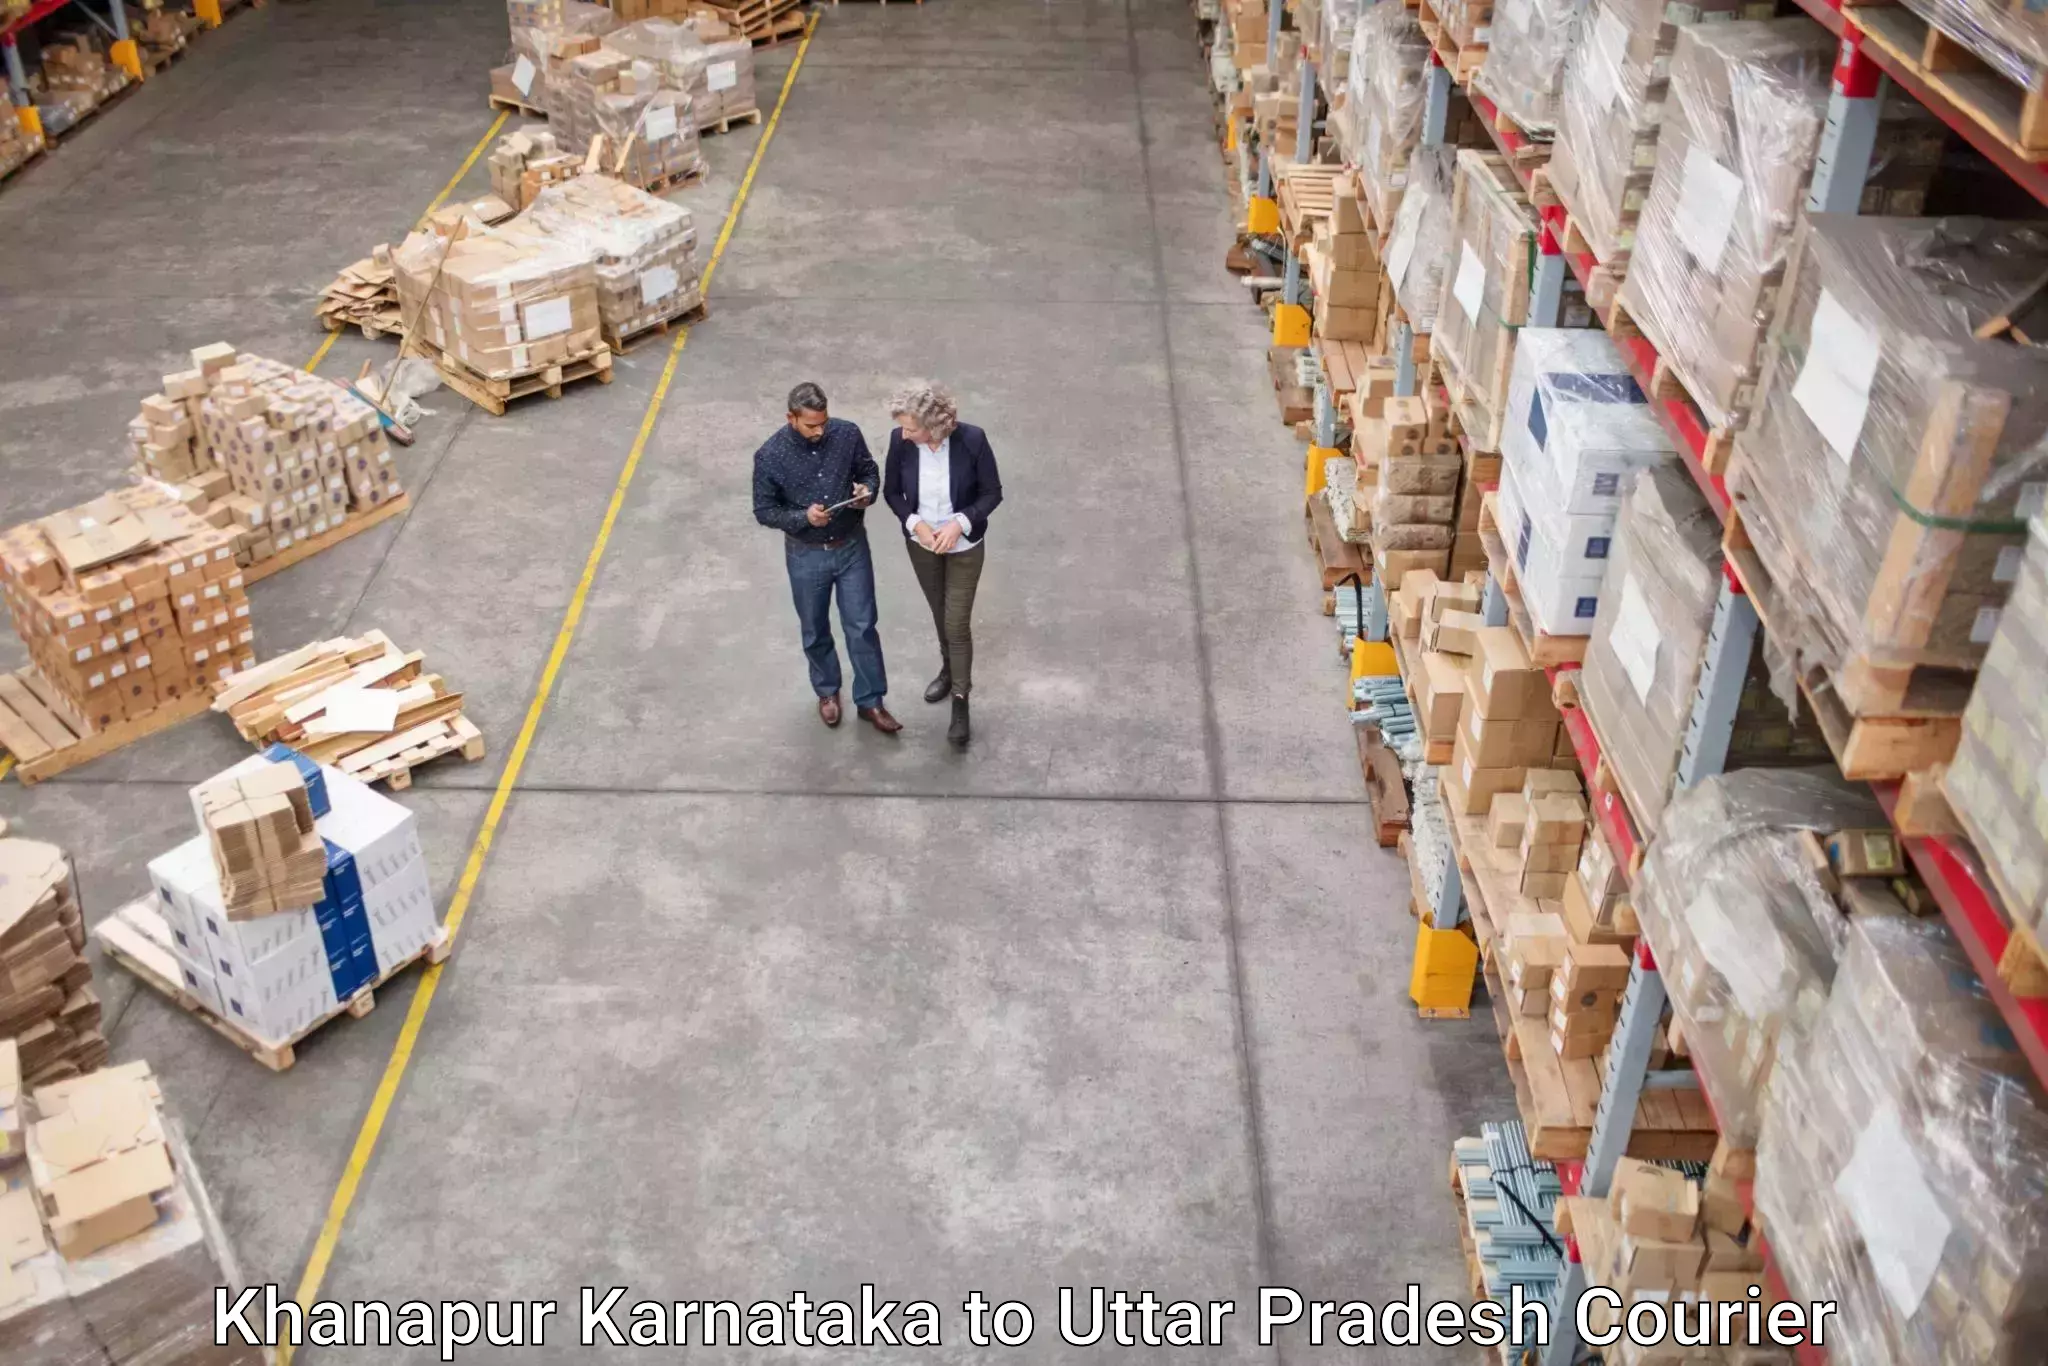 Professional courier handling Khanapur Karnataka to Brijmanganj